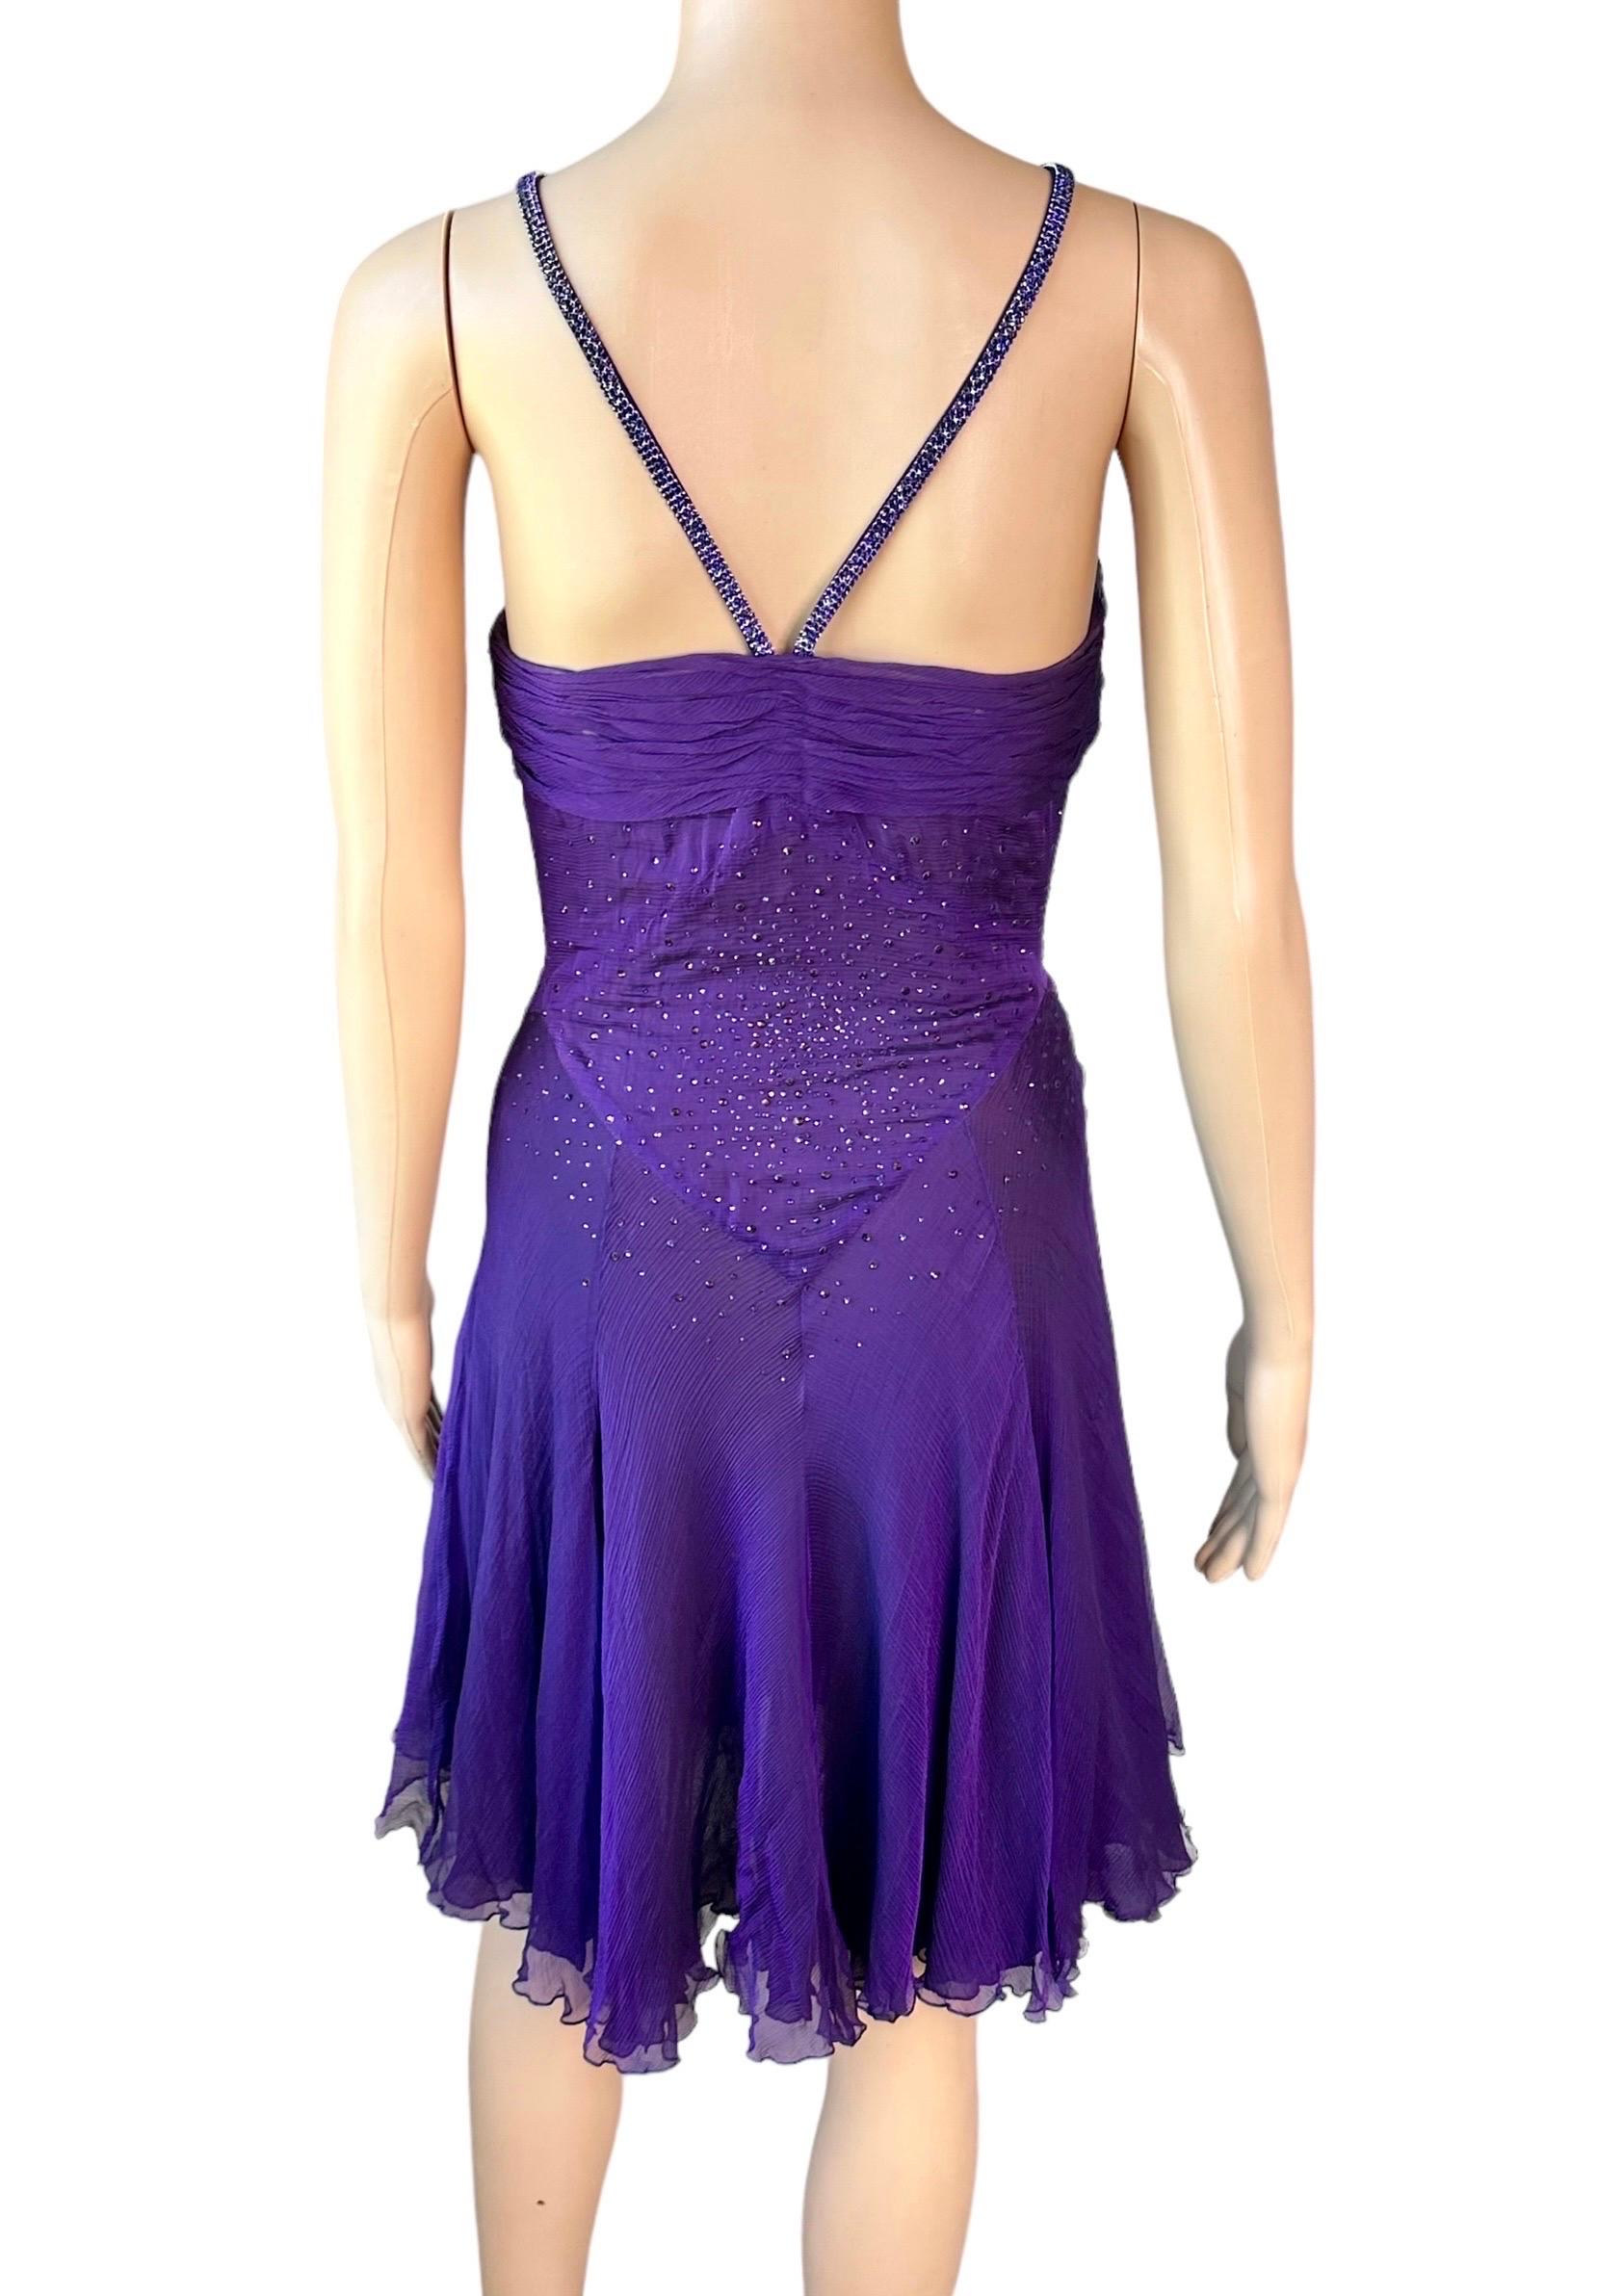 Women's Versace c.2007 Crystal Embellished Plunging Neckline Semi-Sheer Purple Dress For Sale